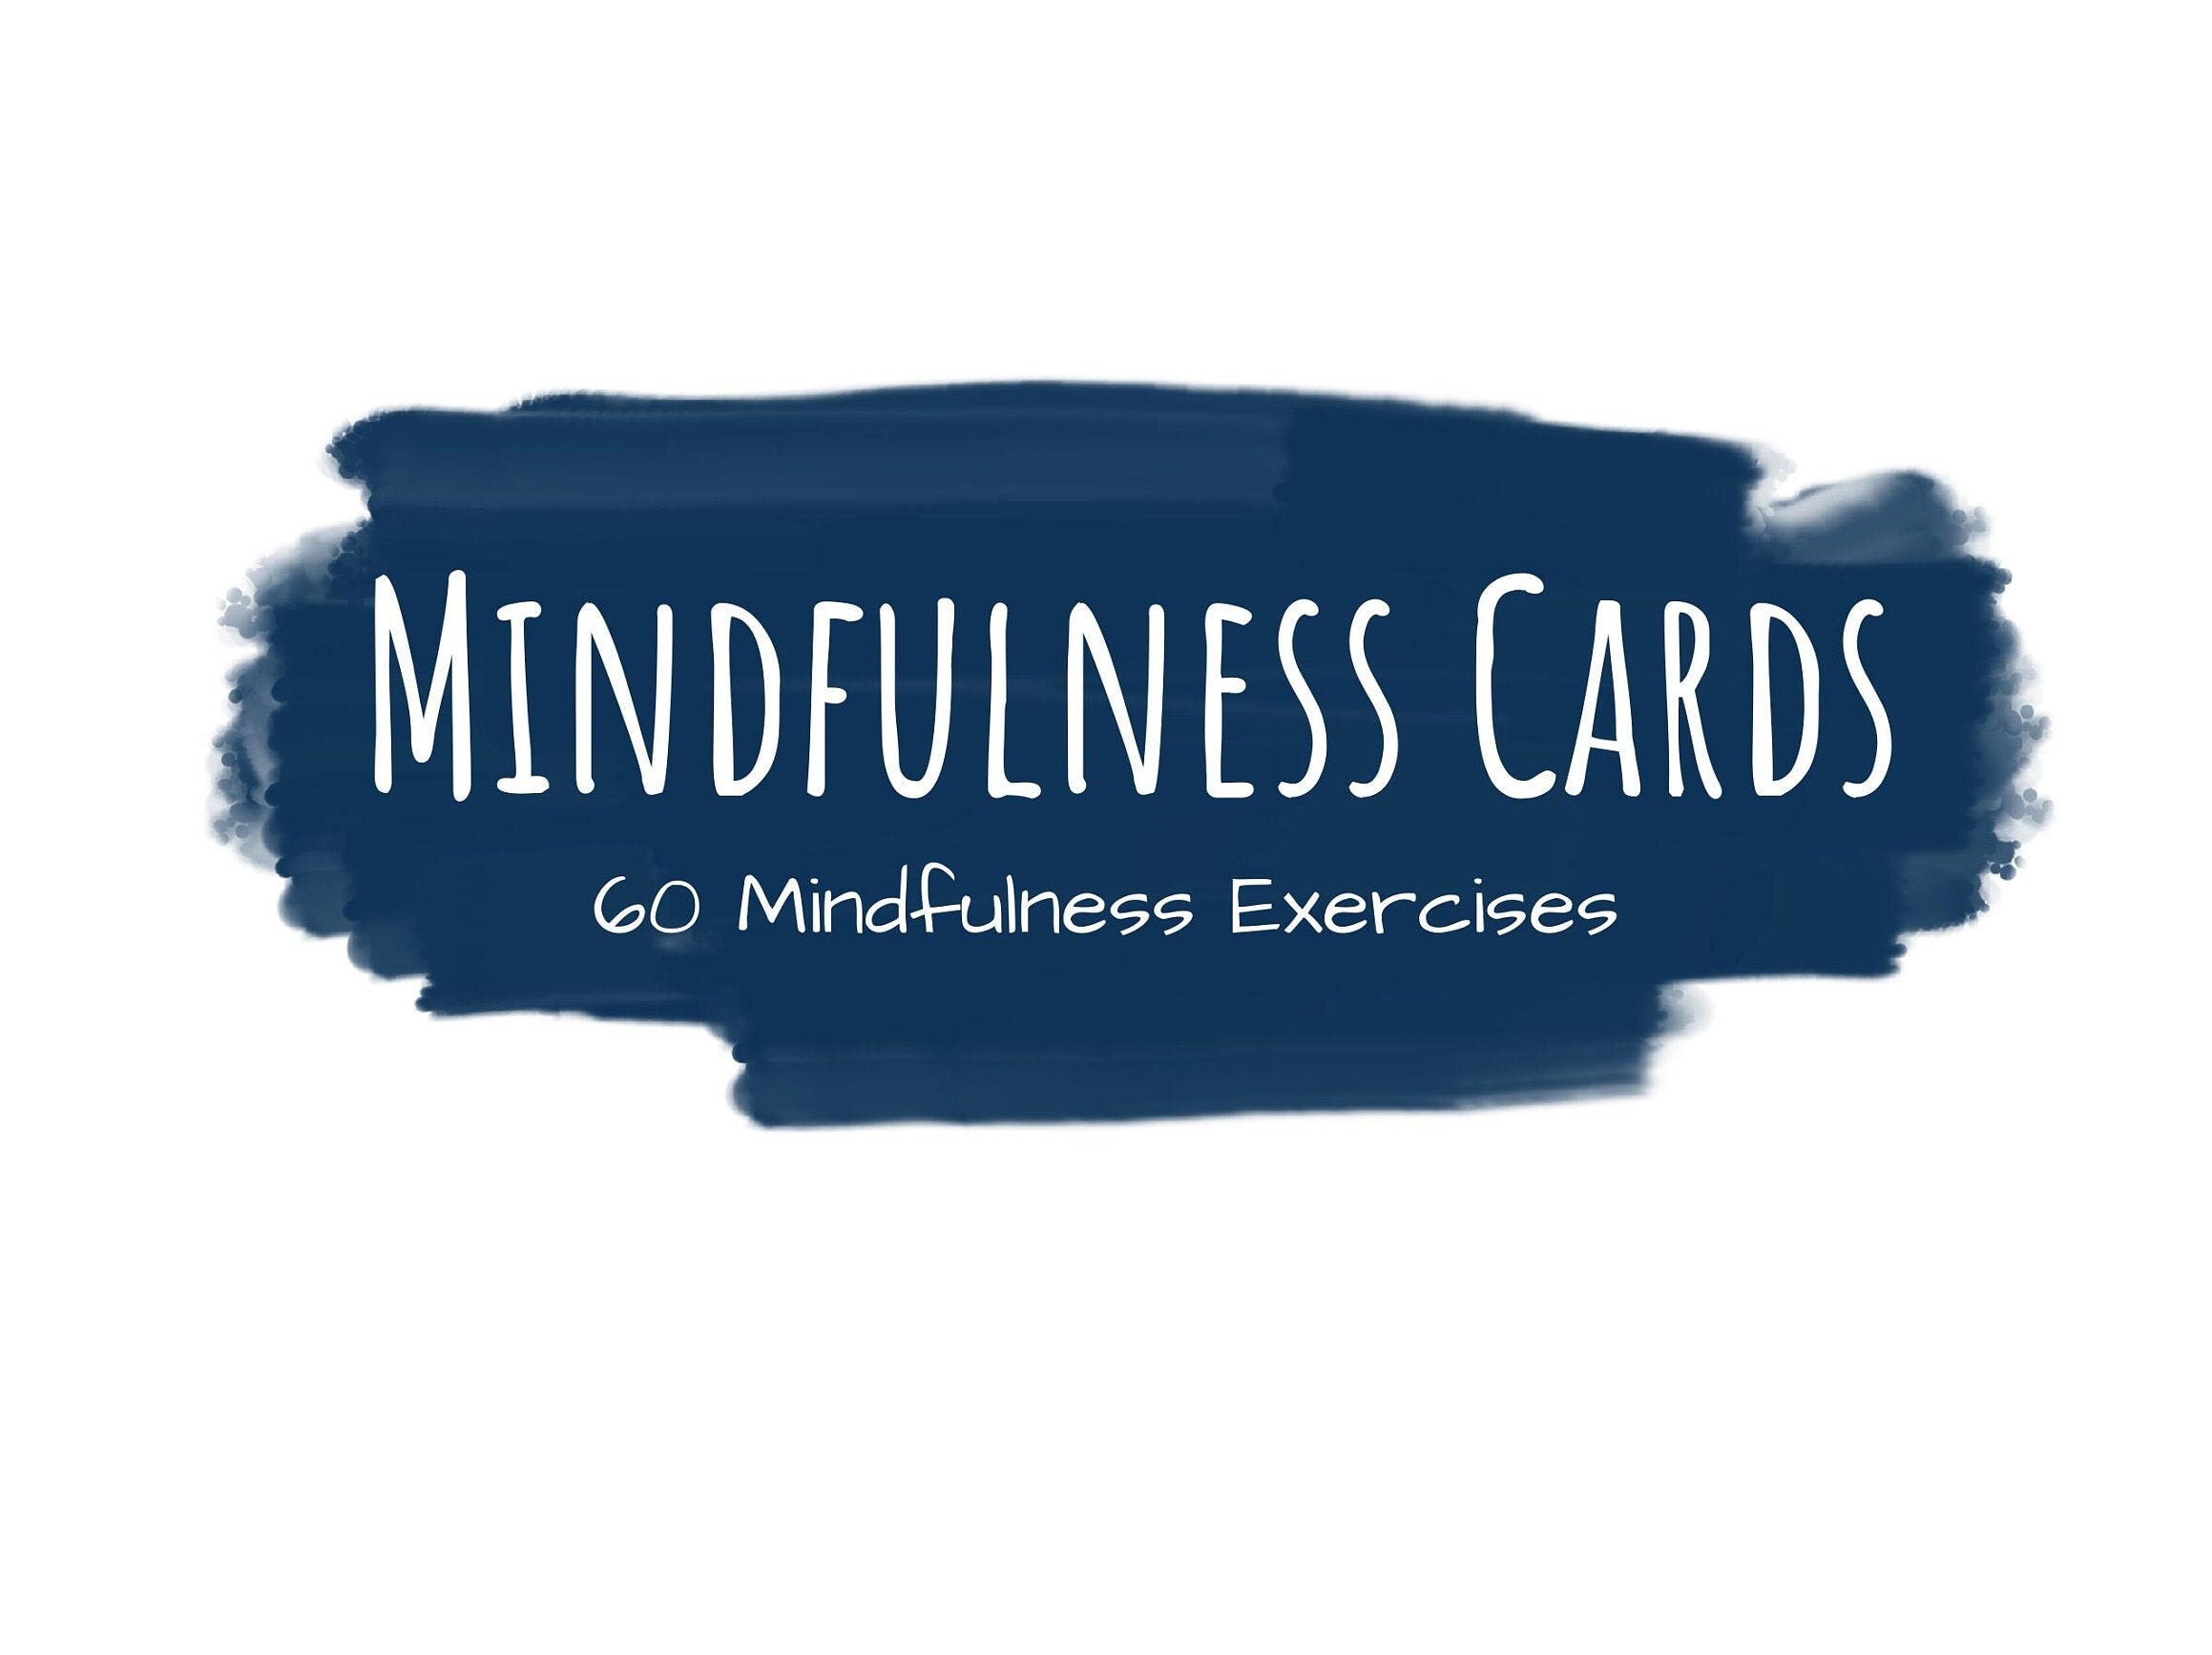 60 Flashcards em Inglês - KIT 2 - Mindful Play